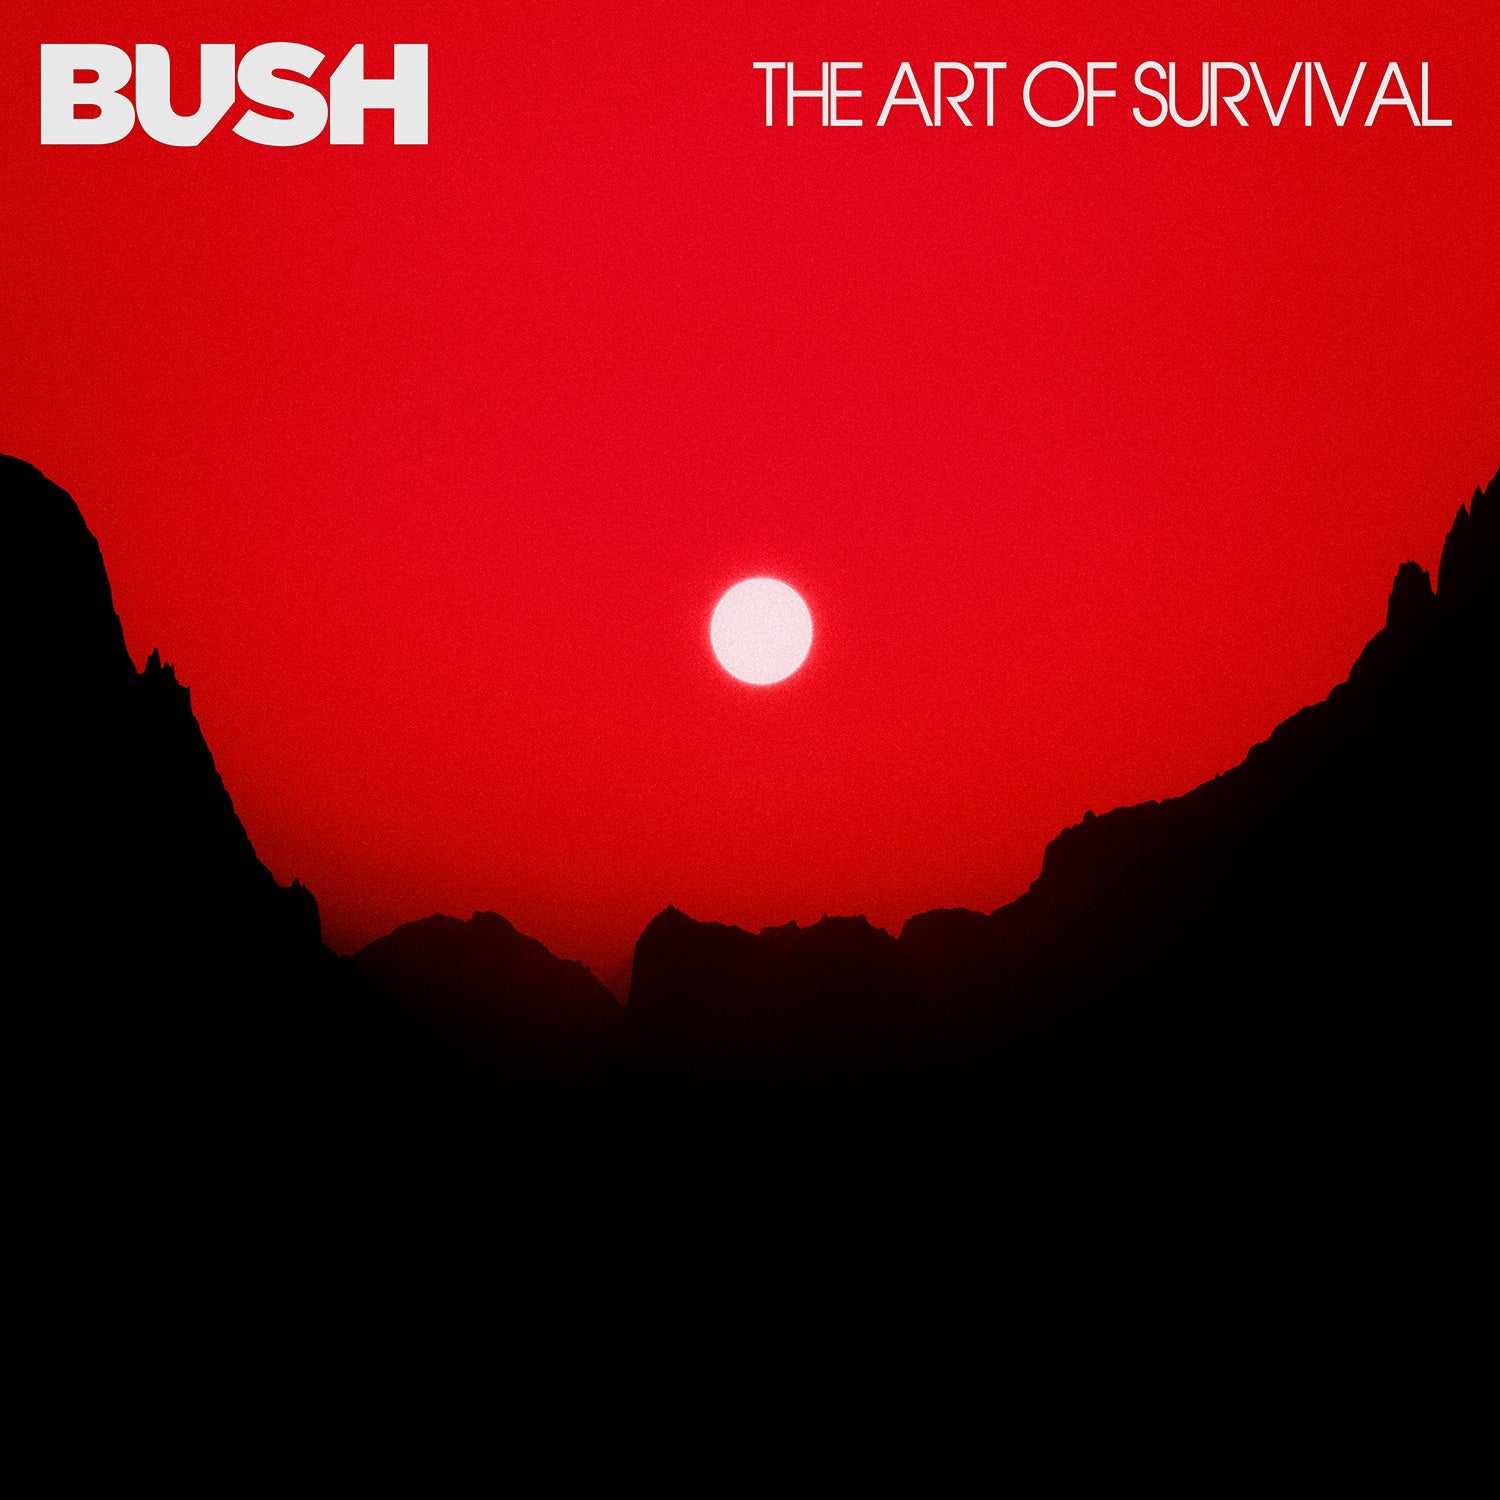 BUSH 'THE ART OF SURVIVAL' LP (White Vinyl)